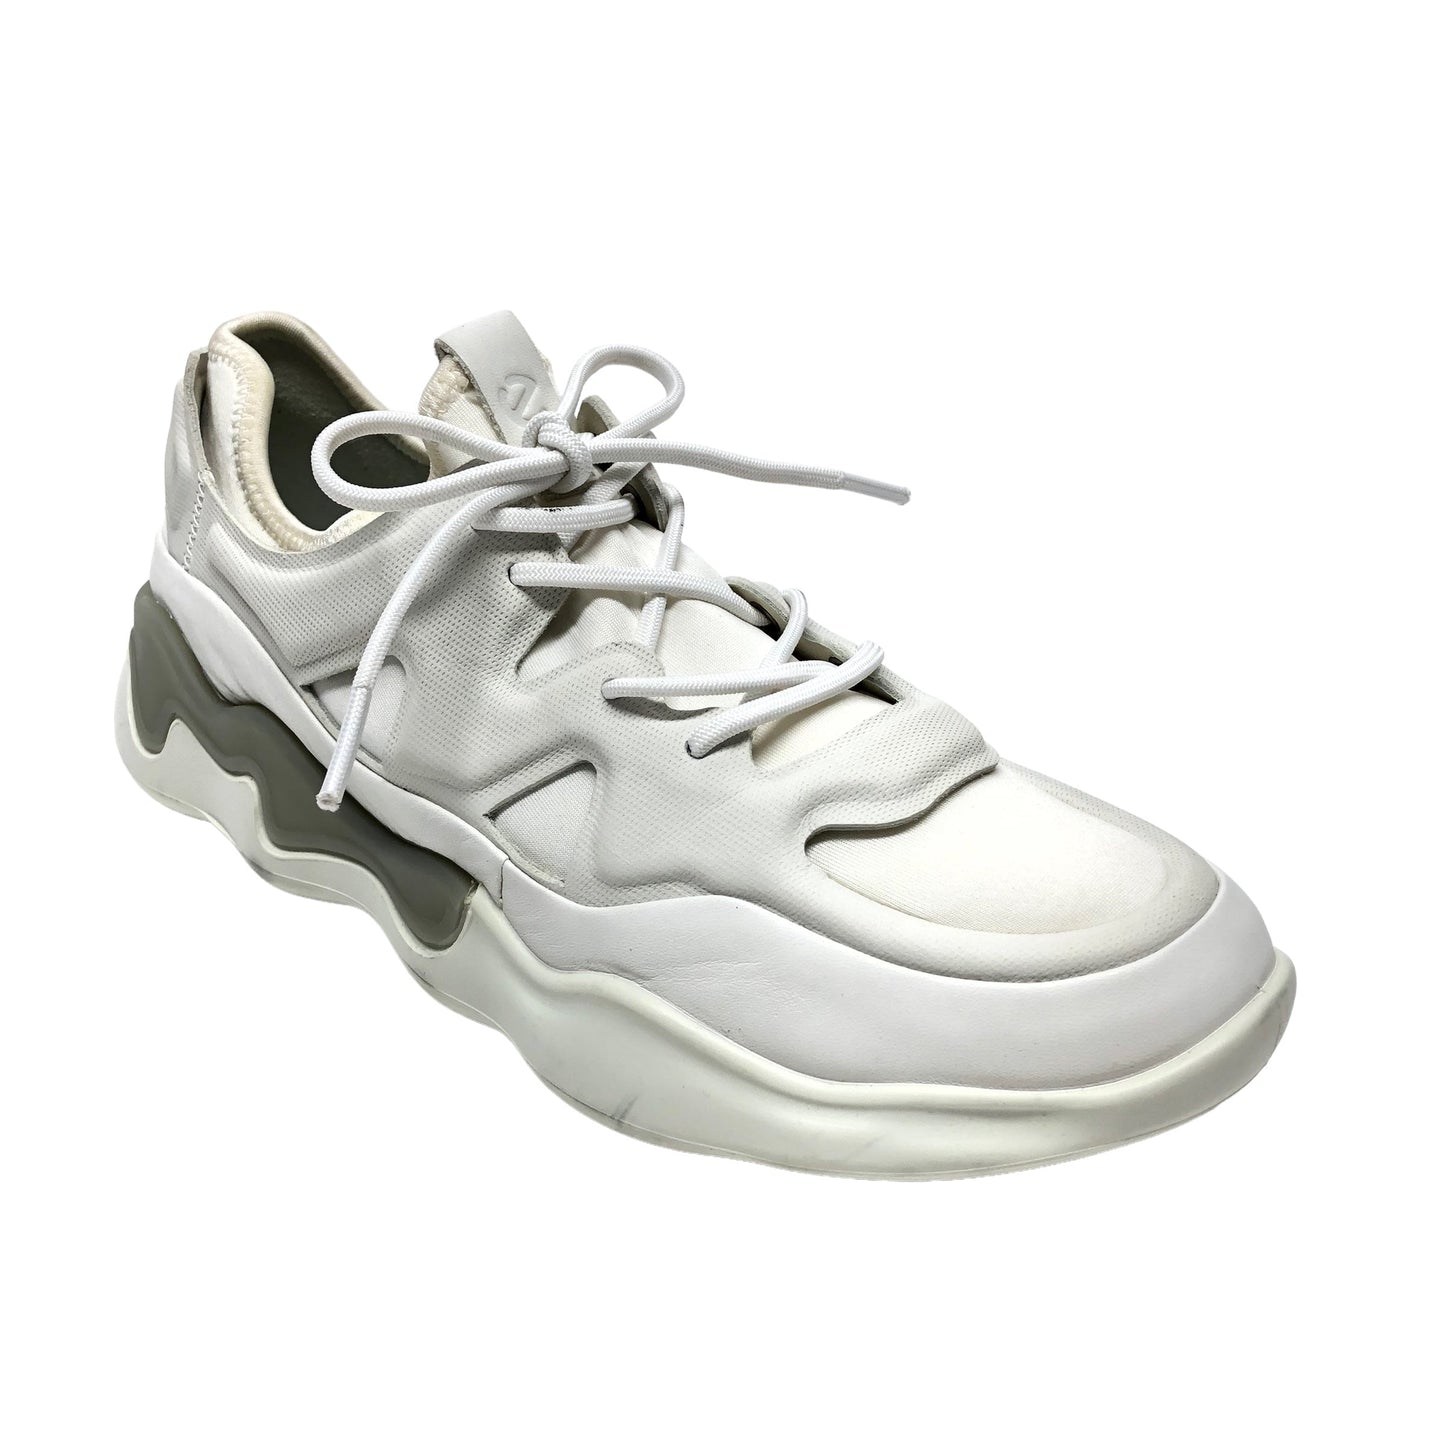 Cream Shoes Athletic Ecco, Size 10